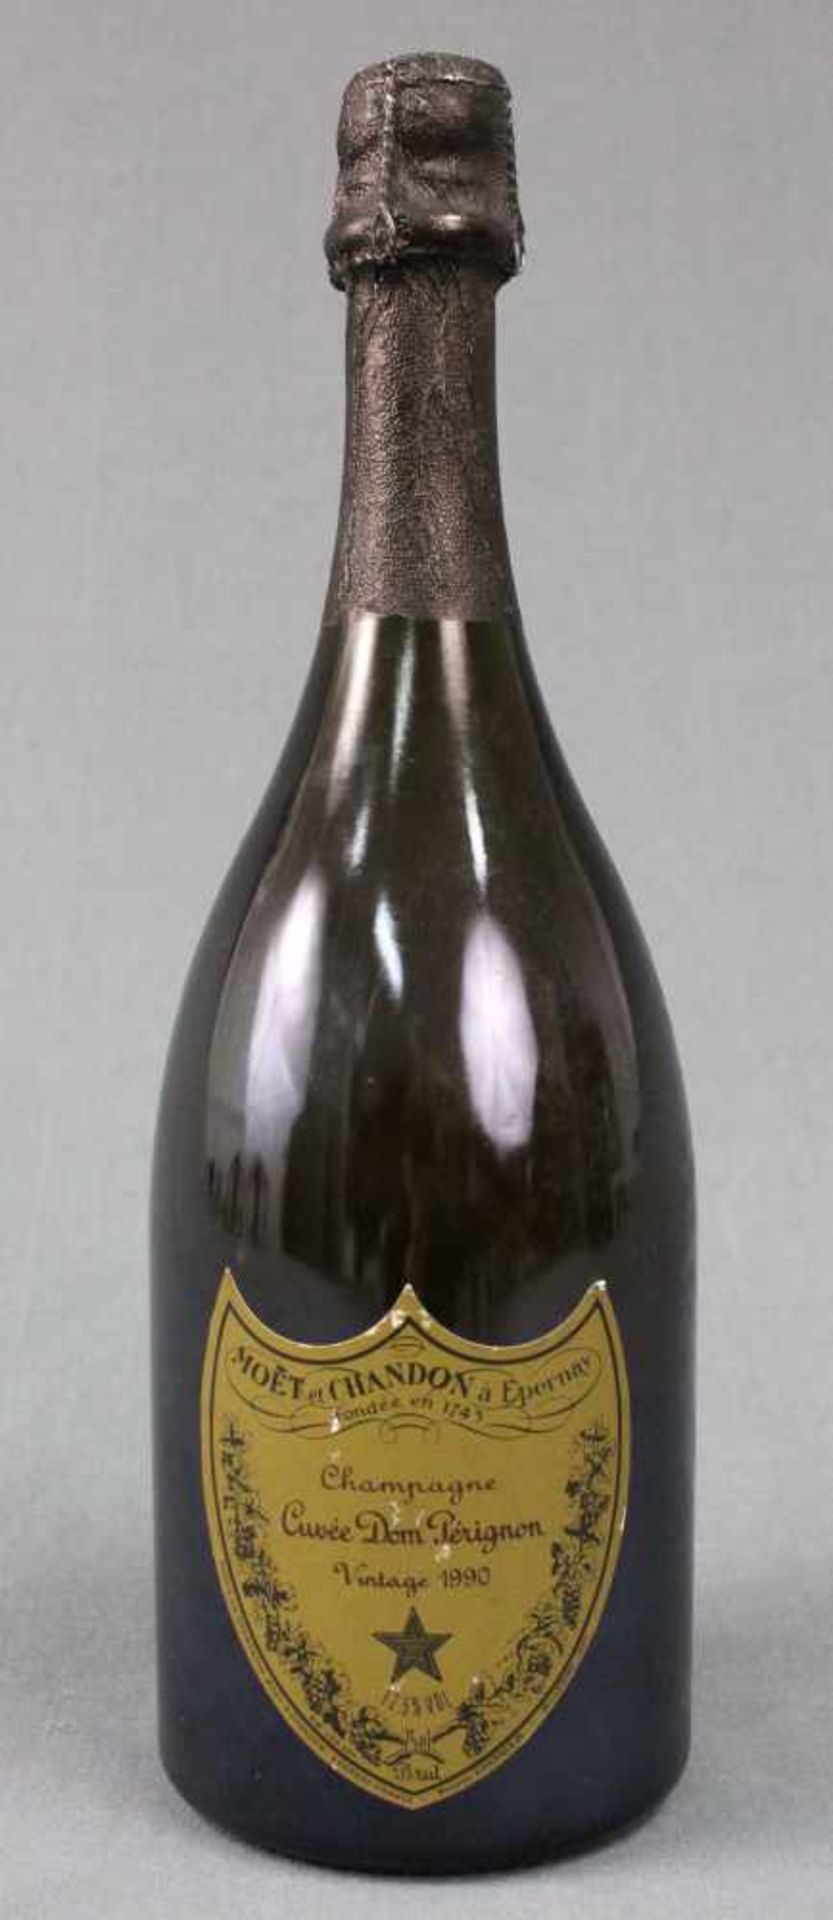 1990 Champagne. Cuvee Dom Perignon. Vintage.Moet et Chandon a Epernay. Fondee en 1743. Eine ganze